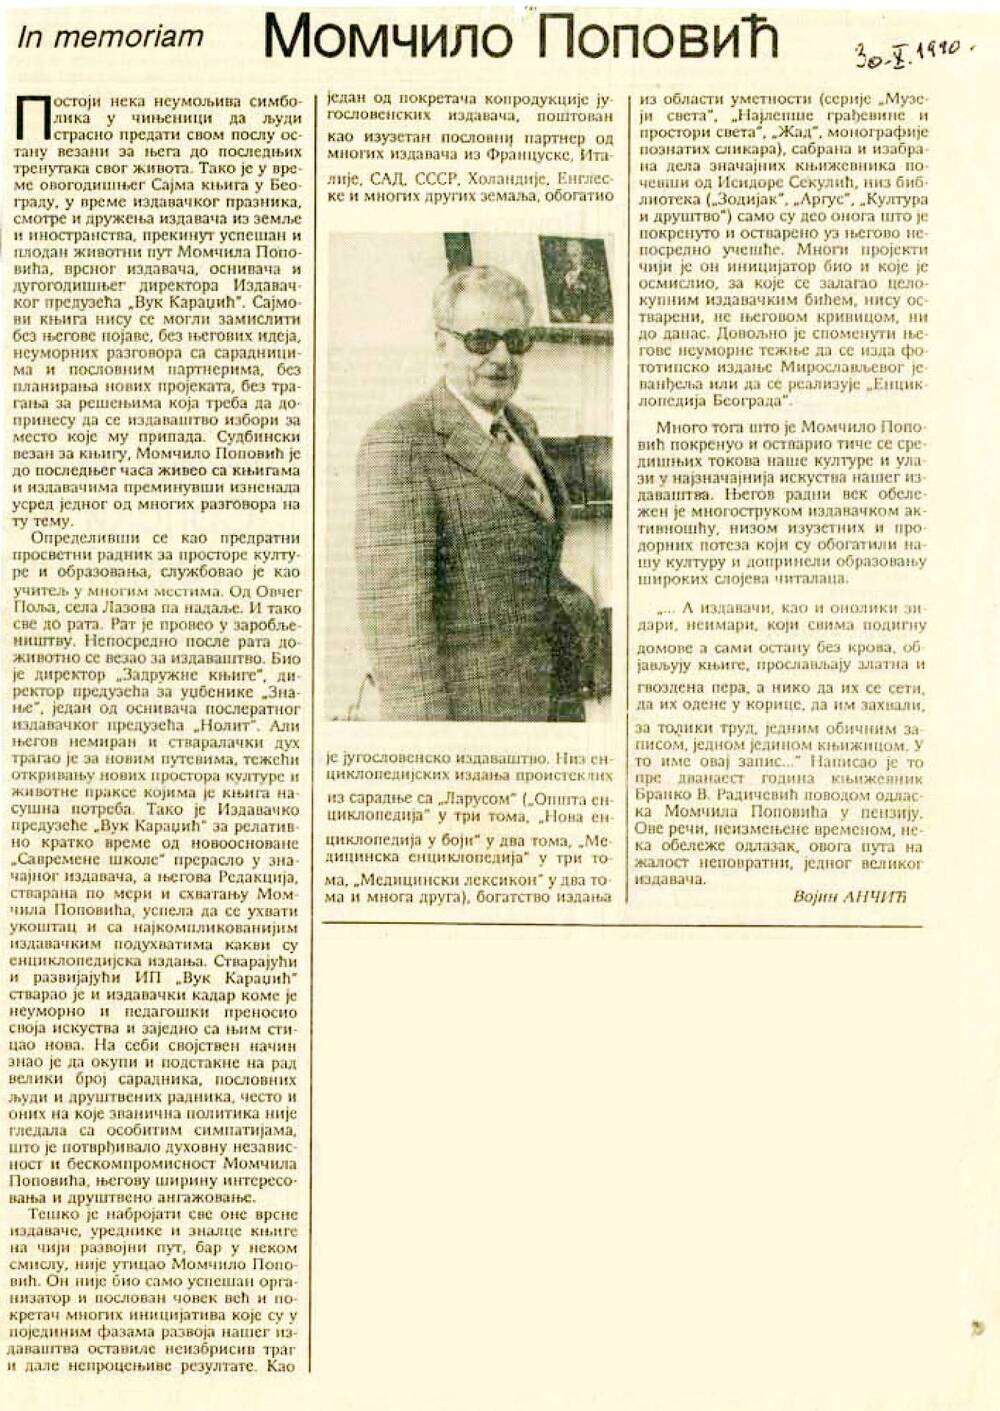 Momčilo Popović - In memoriam, Politika 30. oktobar 1990.